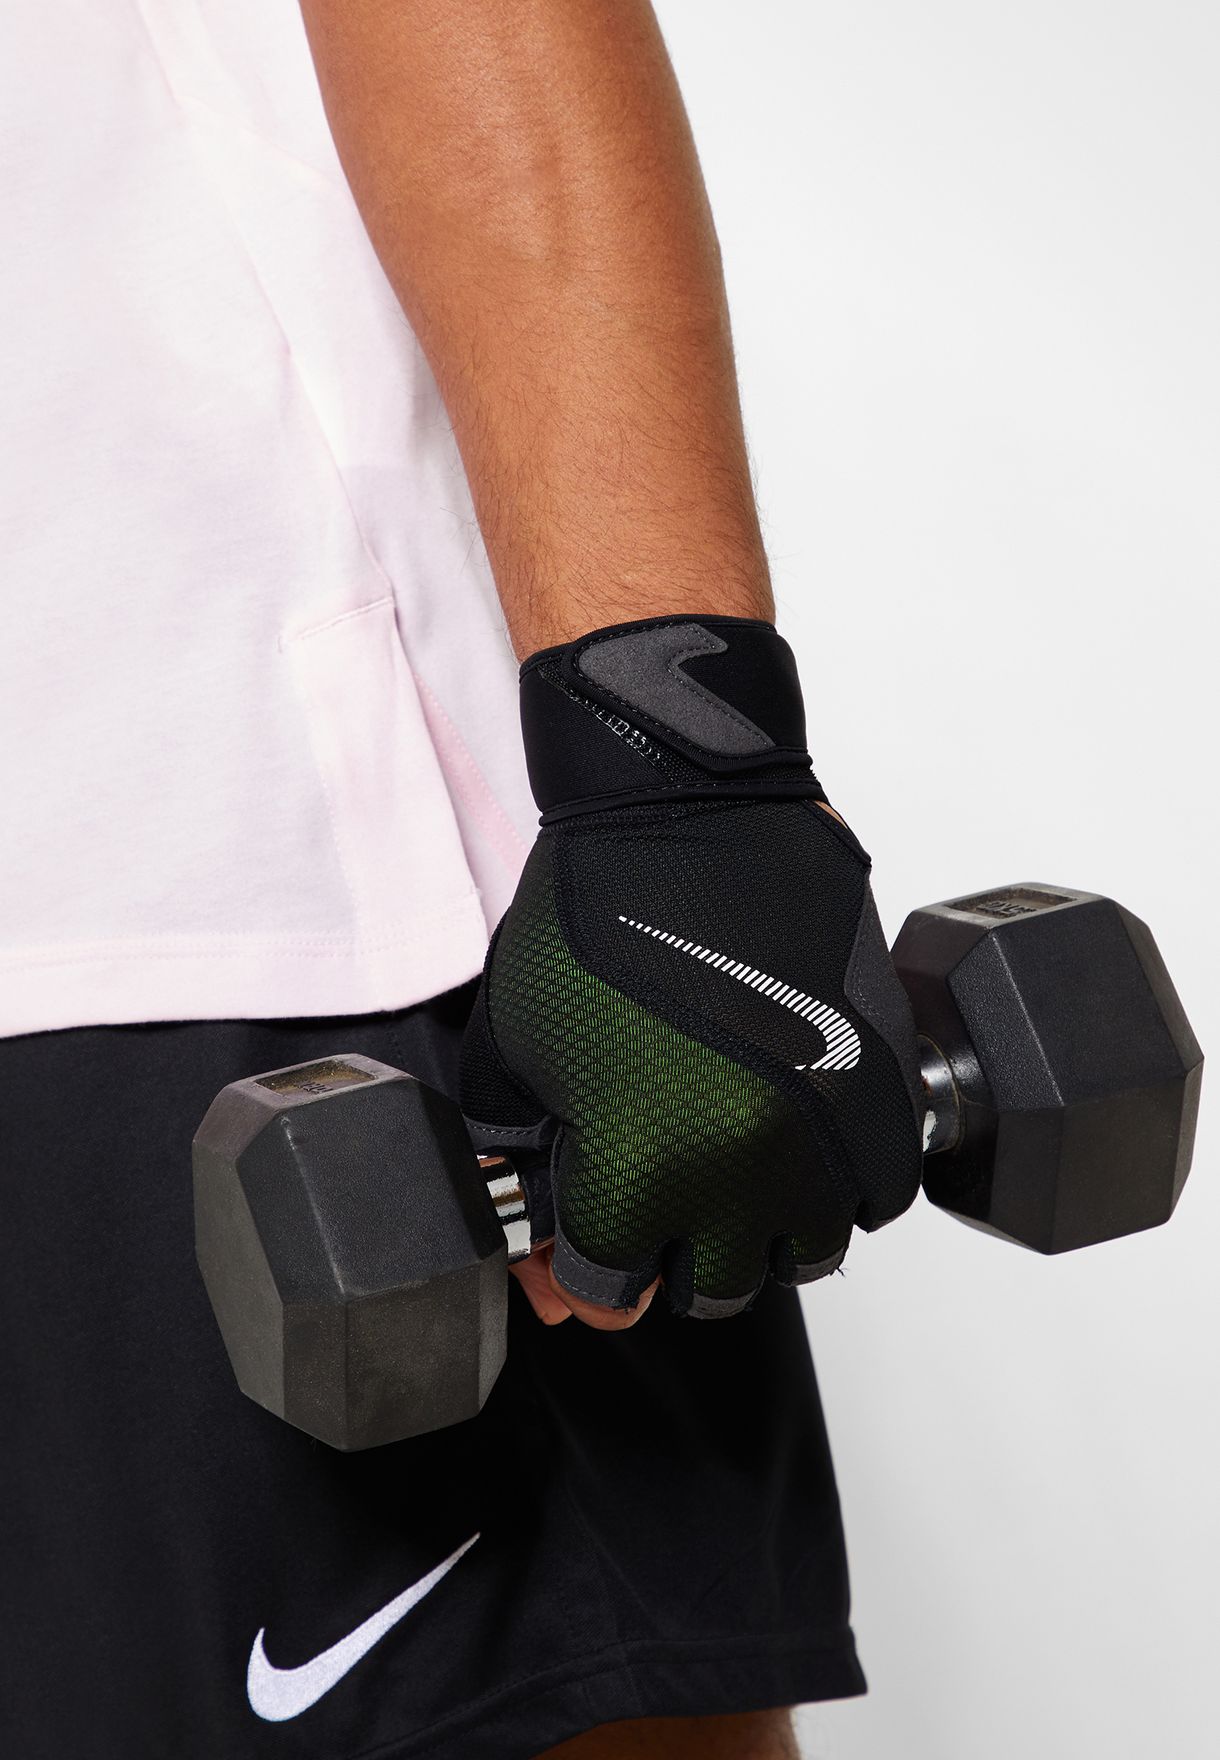 nike gym premium fitness gloves